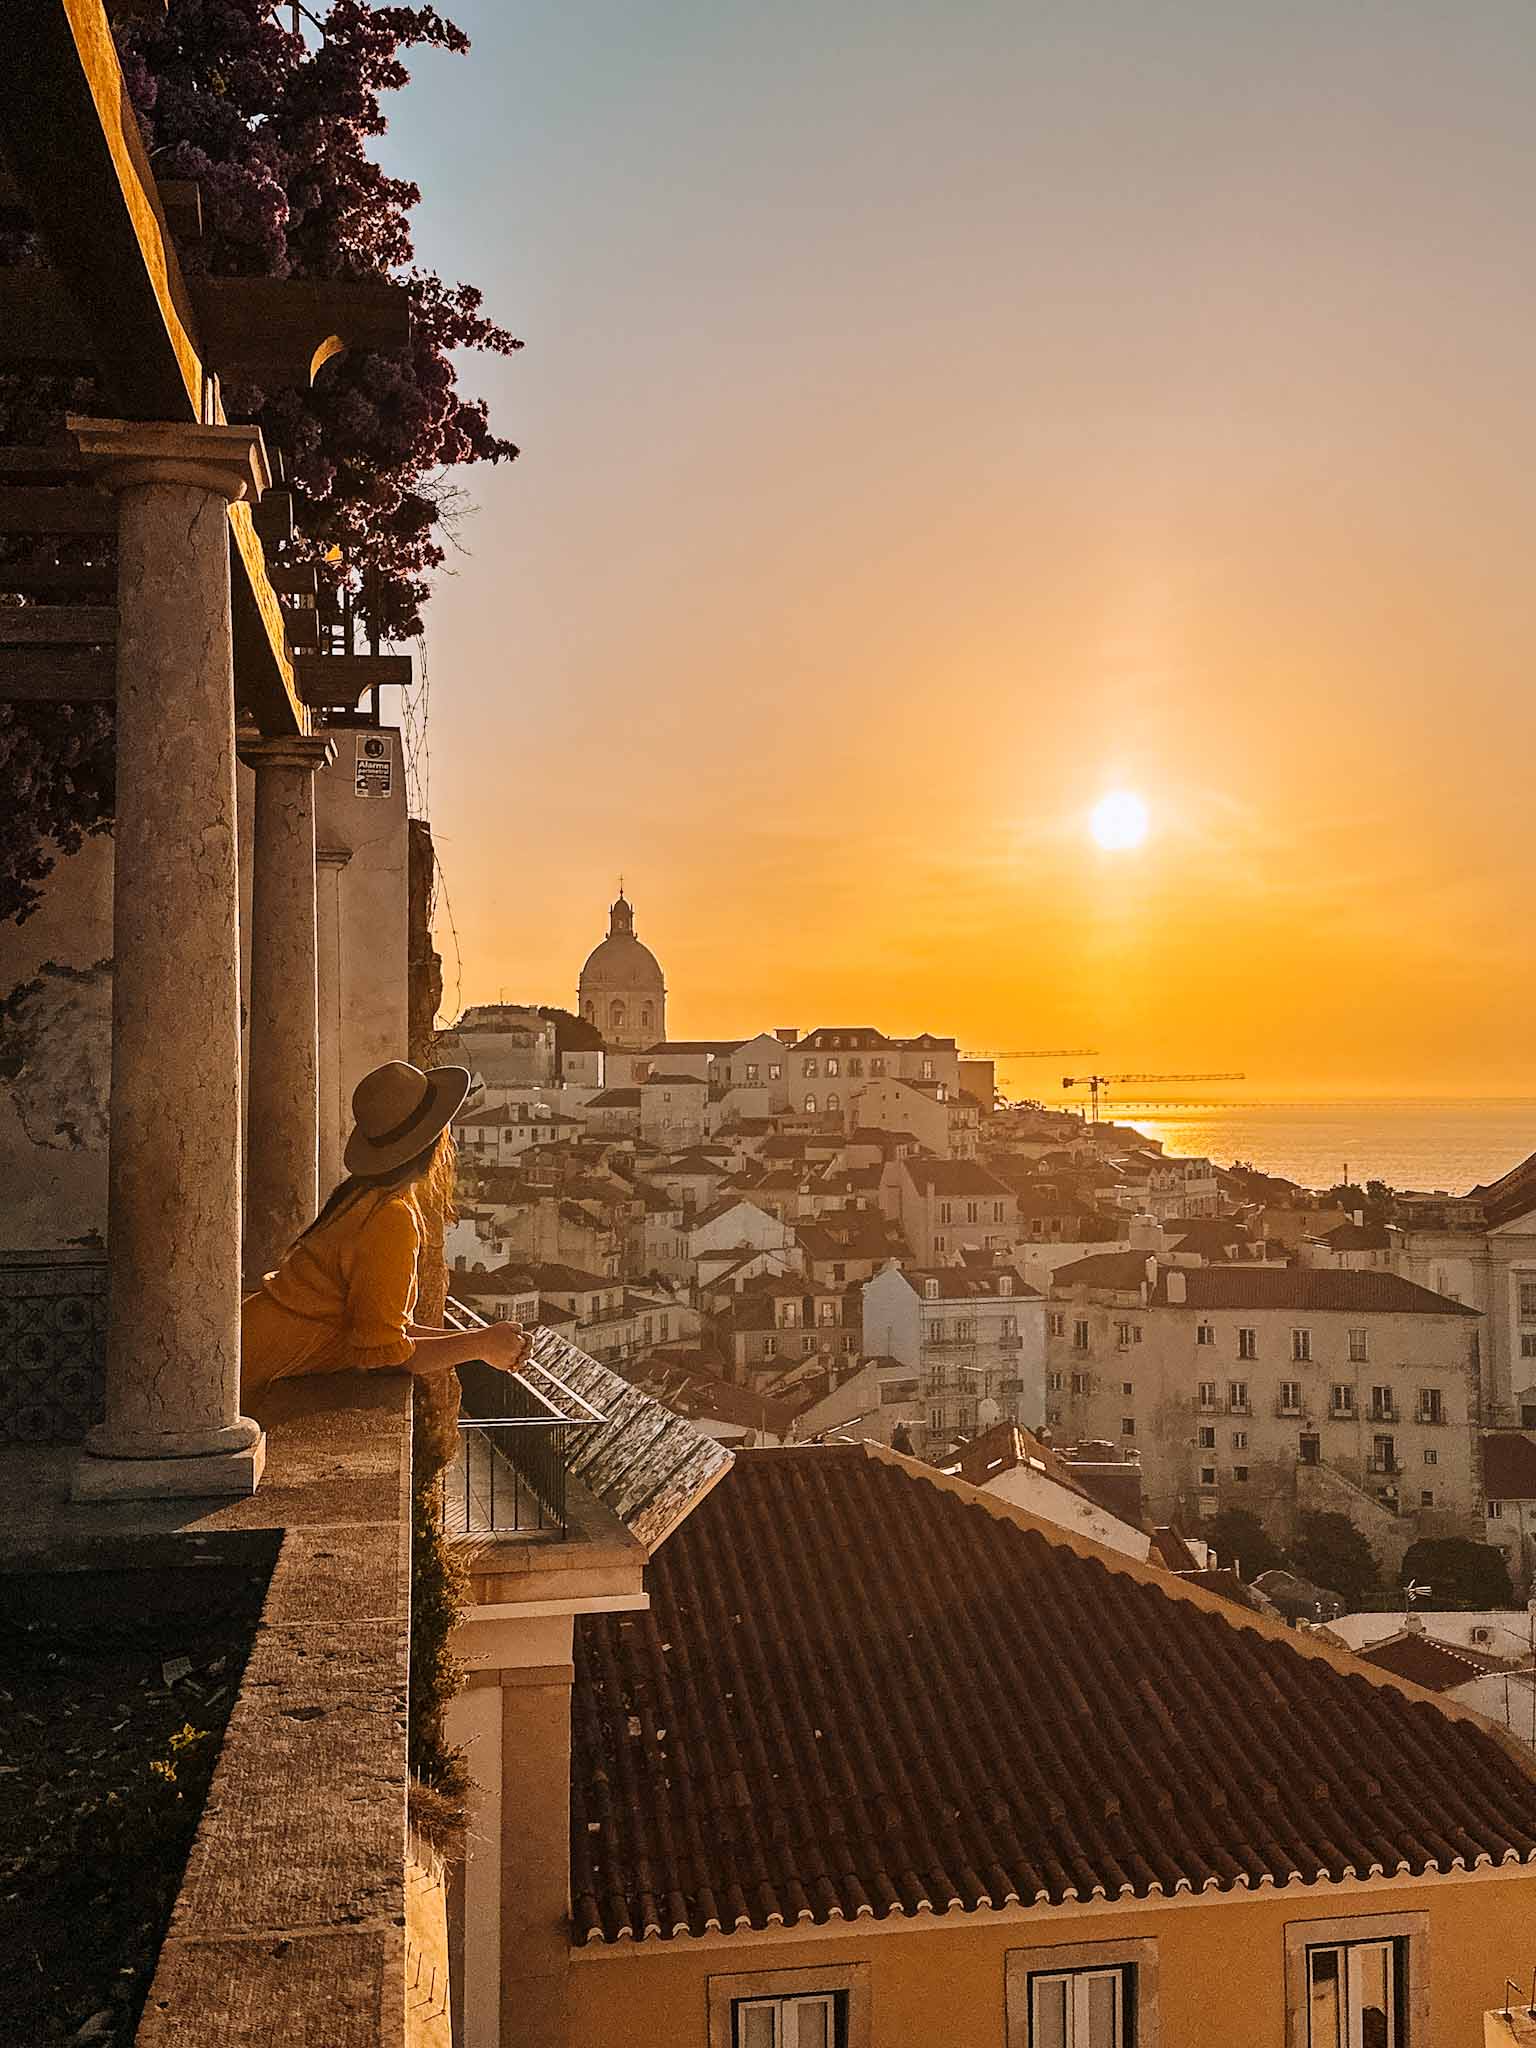 Best Instagram photo spots in Lisbon - Miradouro de Santa Luzia